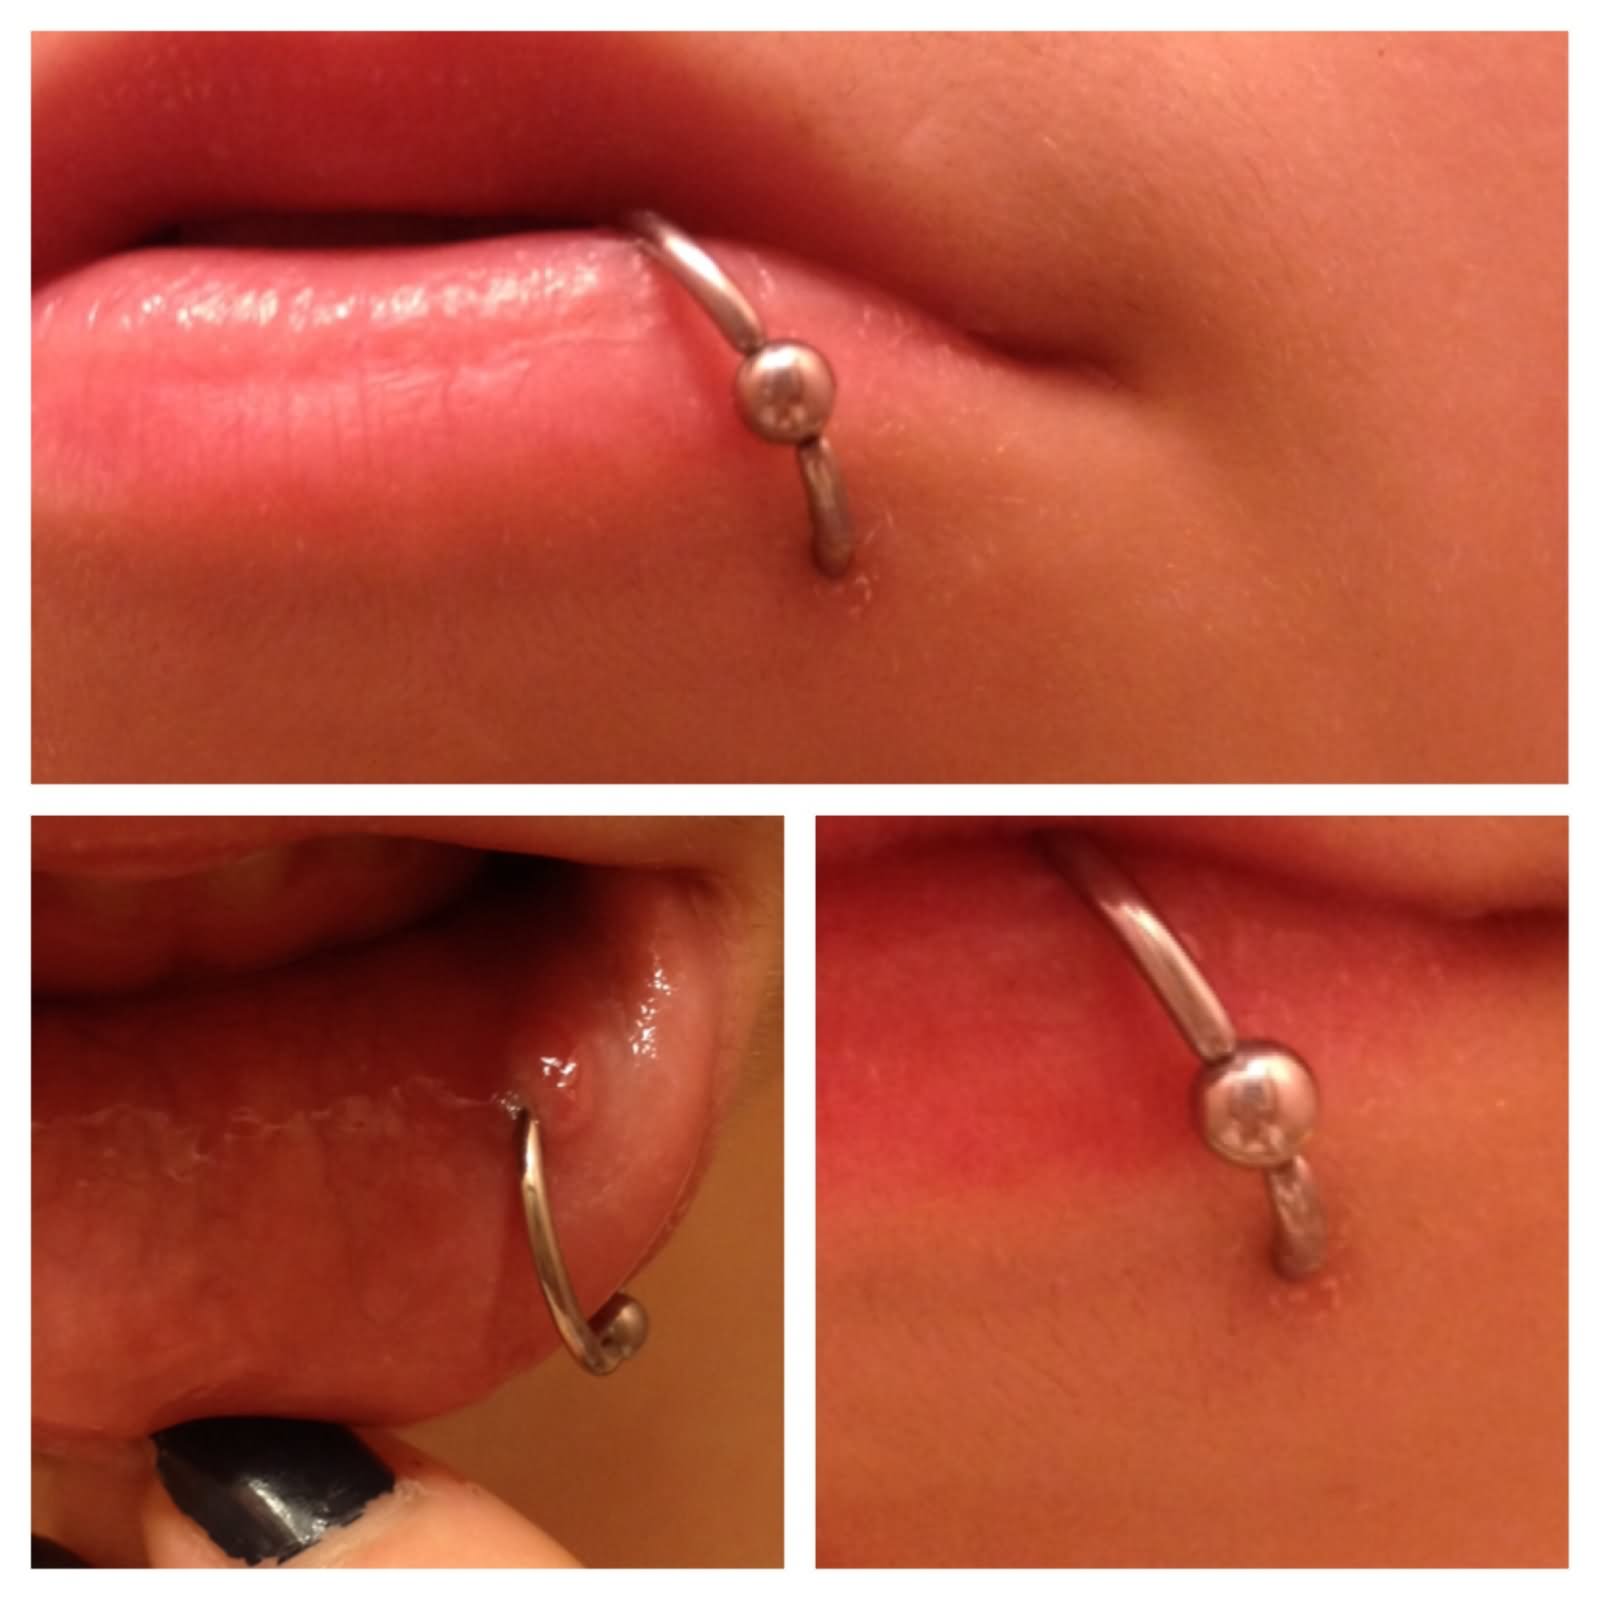 Silver Bead Ring Lips Piercing